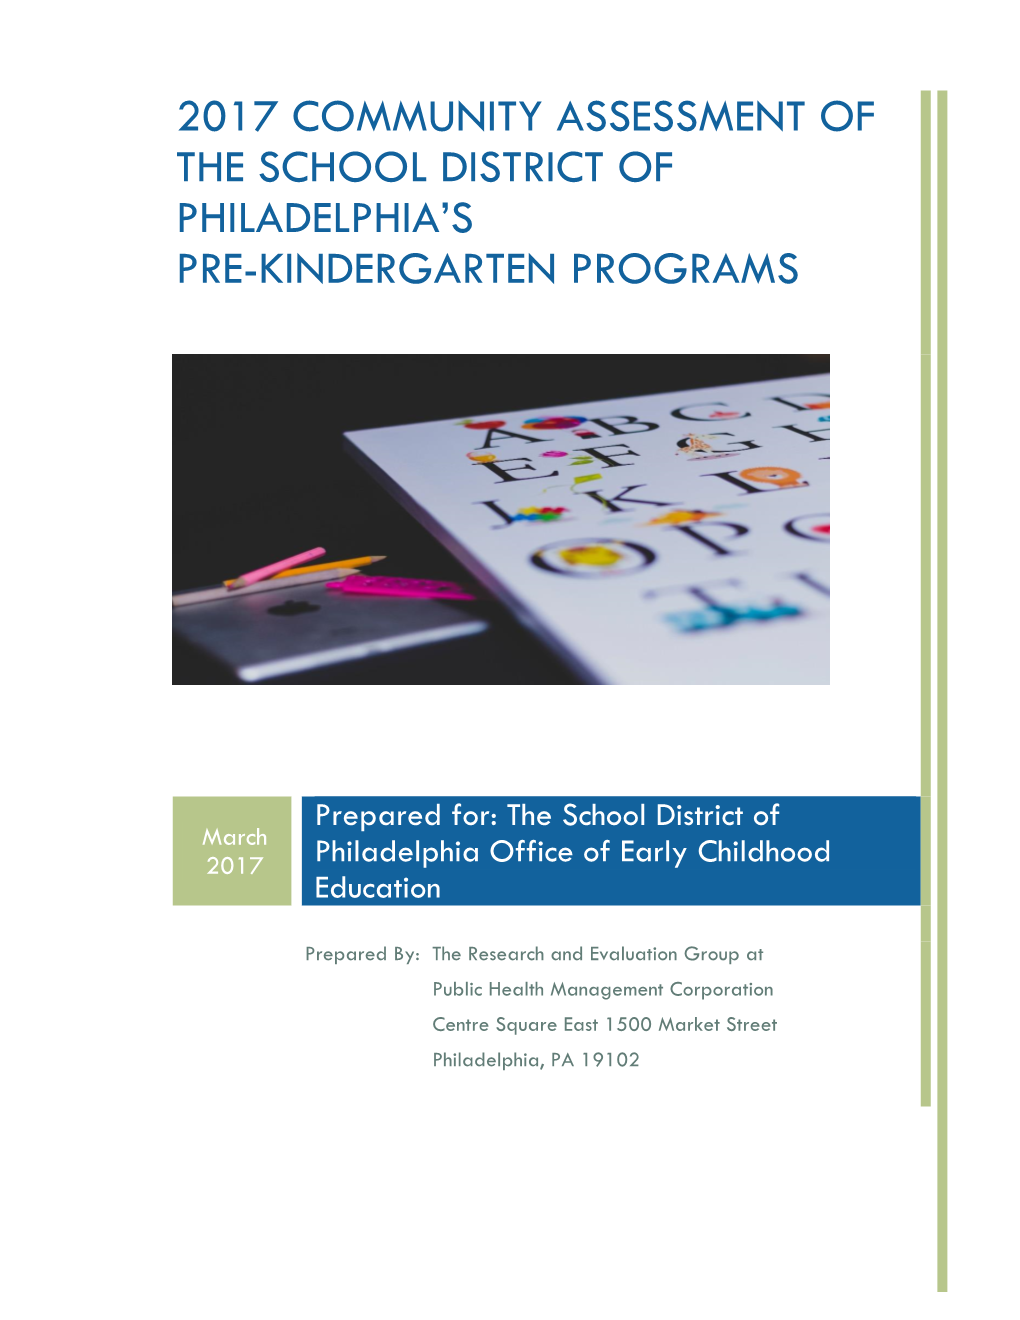 Community Assessment of the School District of Philadelphia's Pre-K